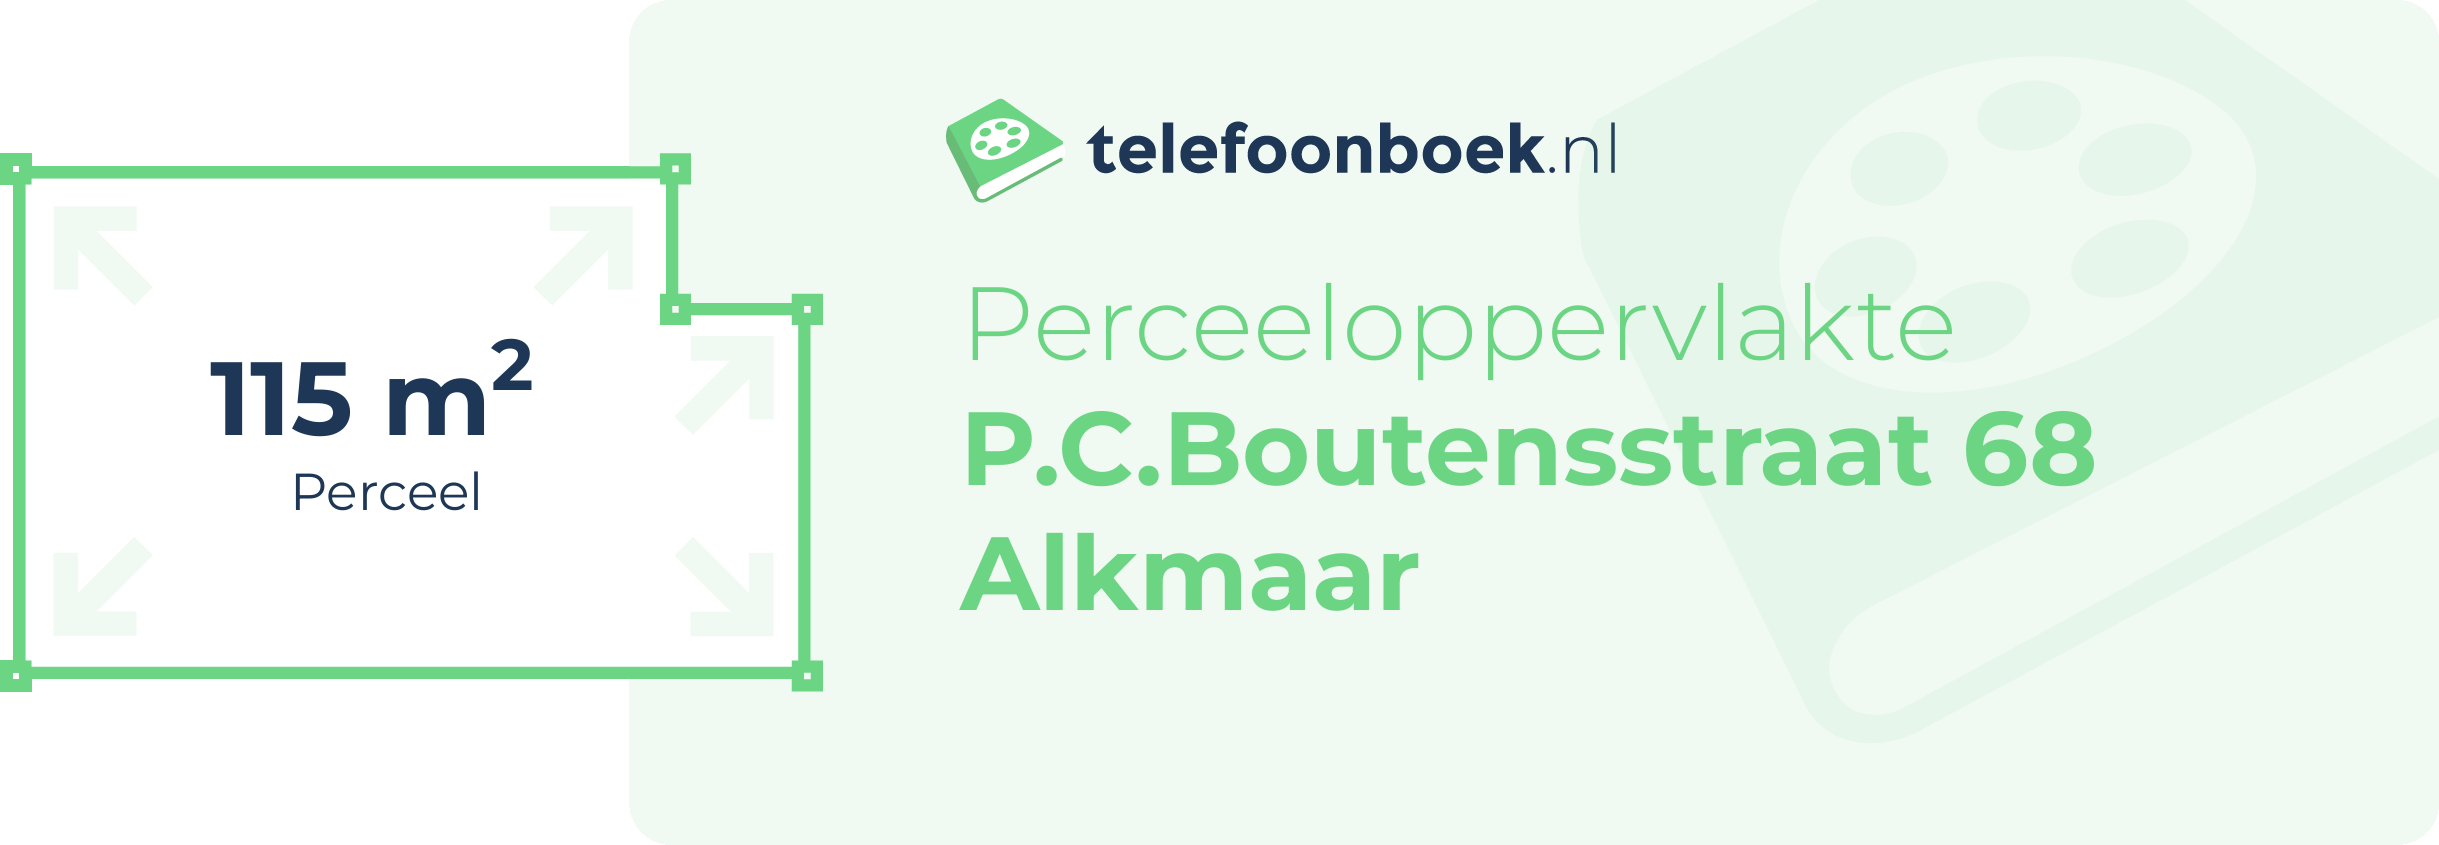 Perceeloppervlakte P.C.Boutensstraat 68 Alkmaar